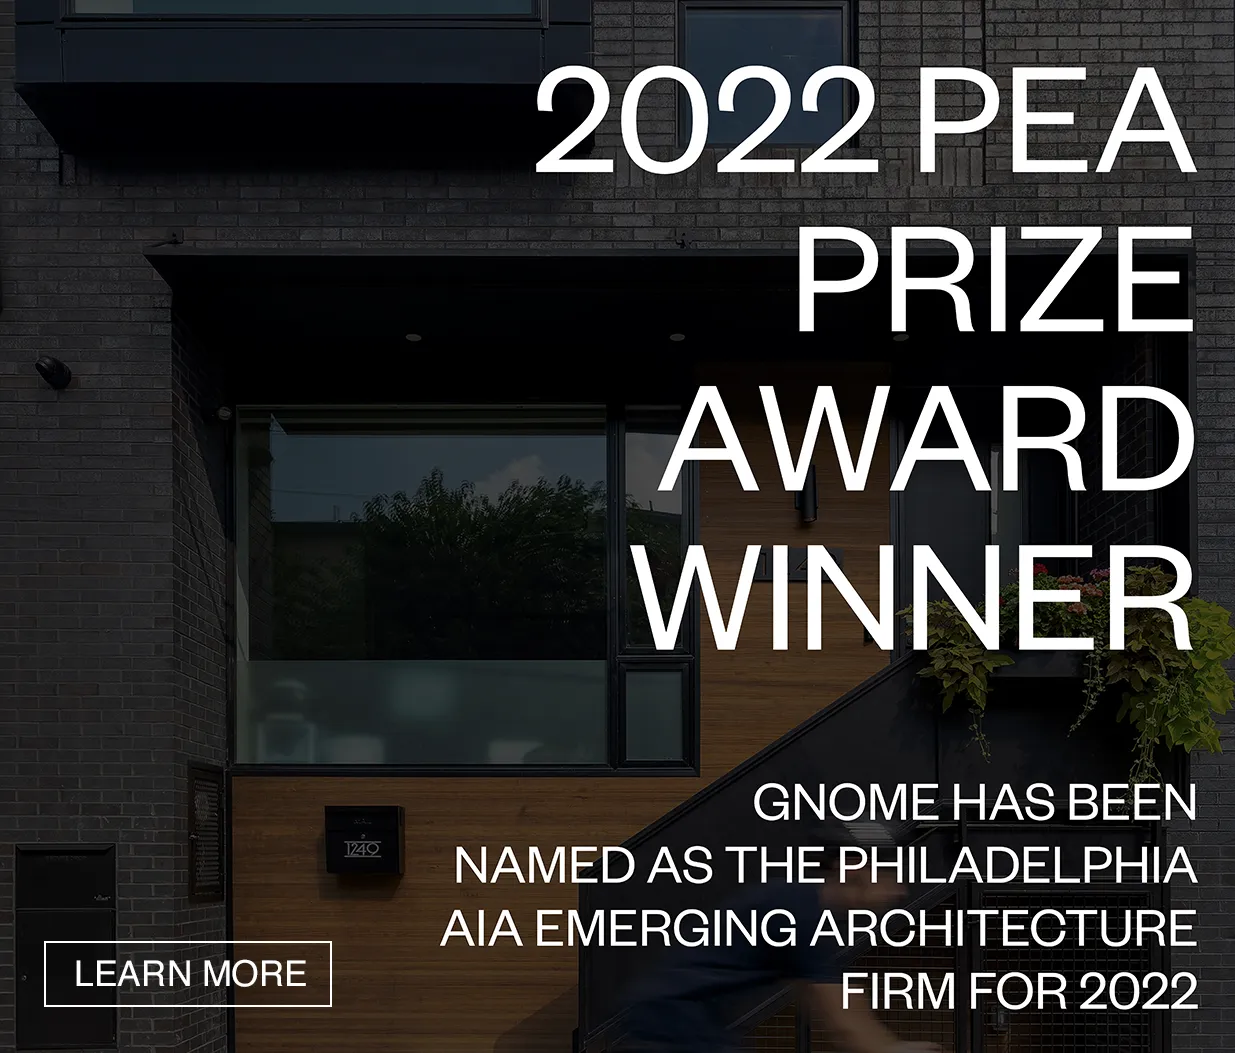 2022 PEA Prize Award Winner